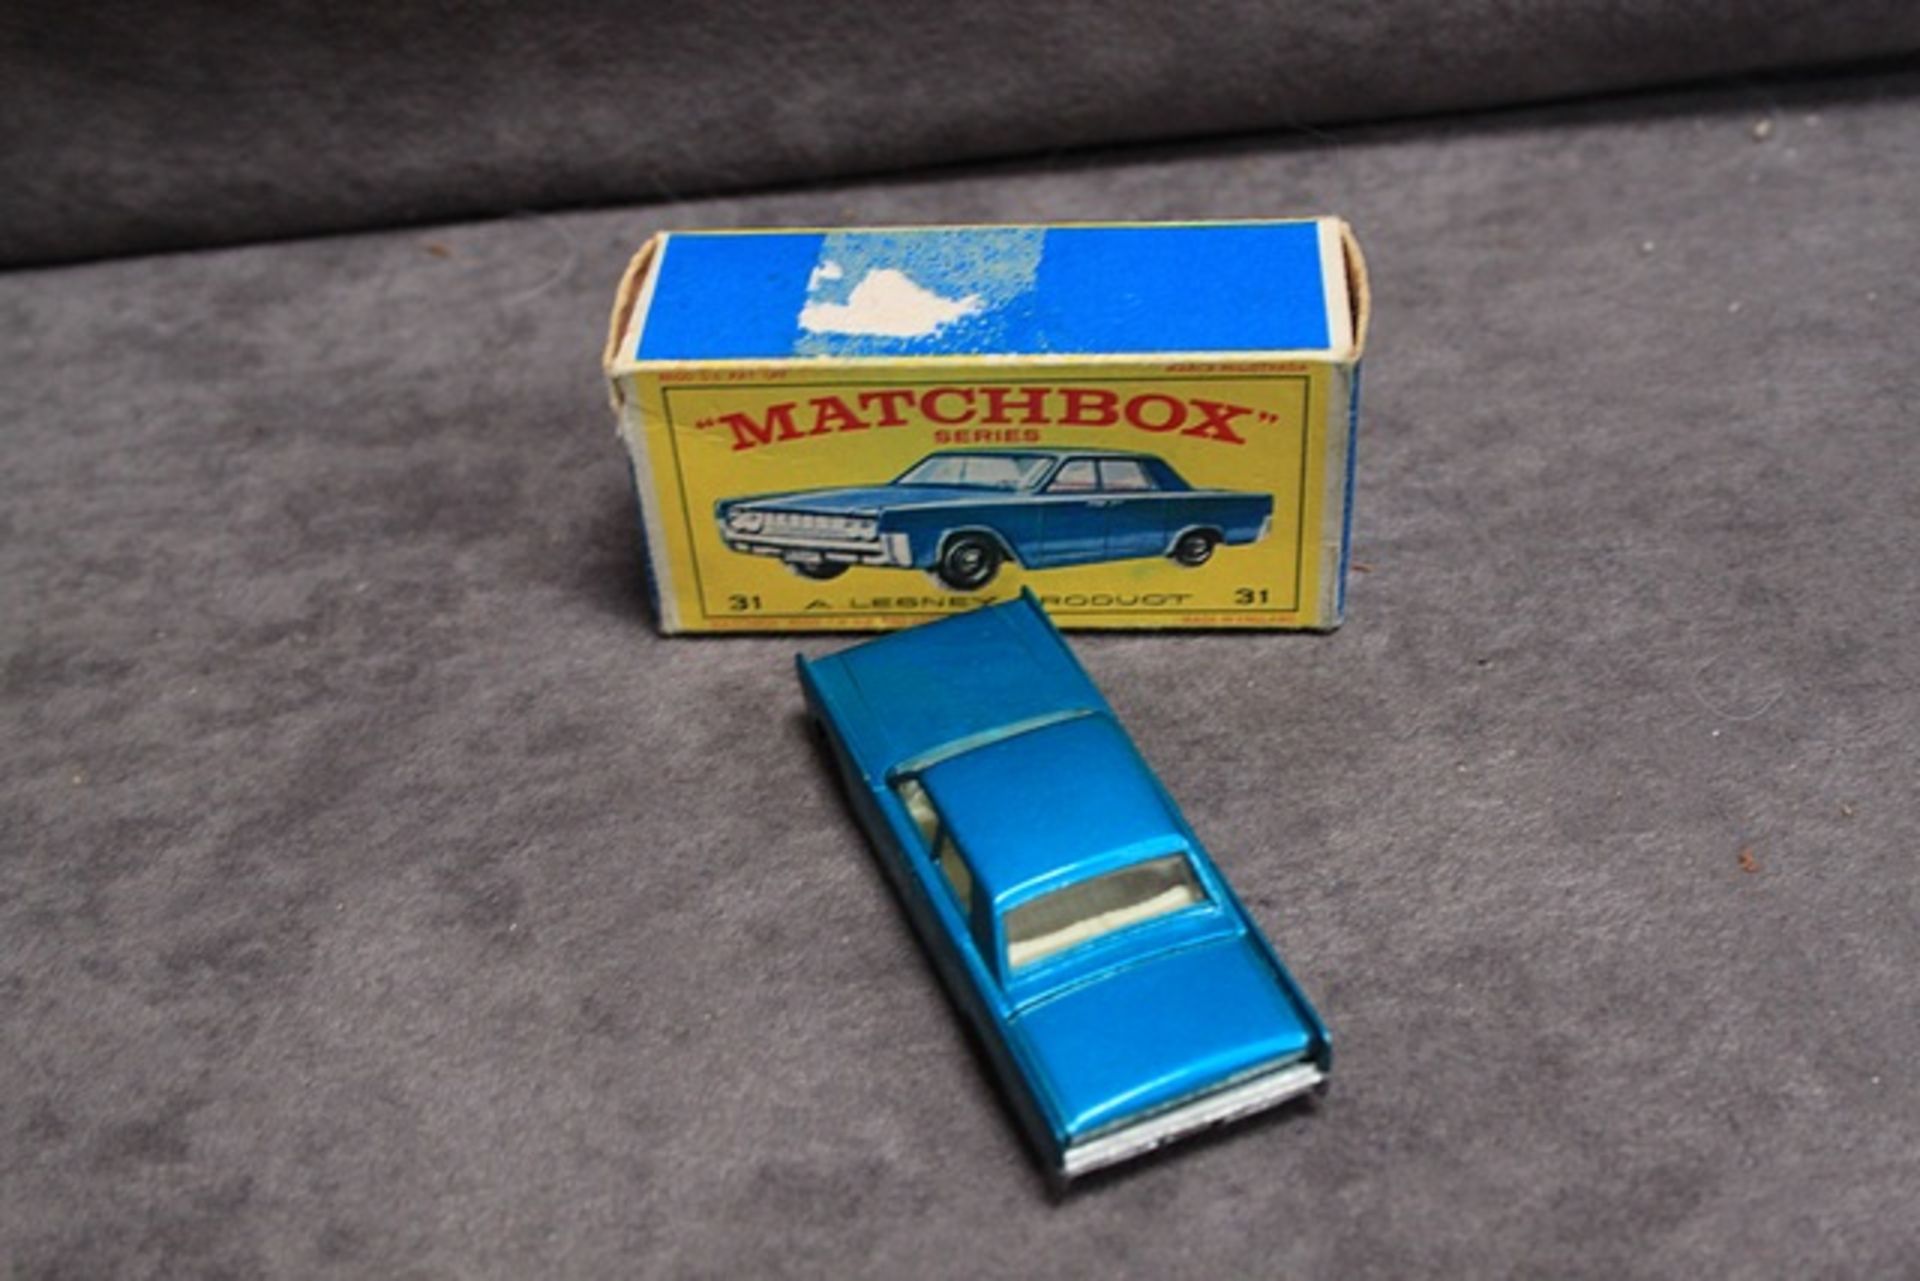 Mint Matchbox Series diecast #31 Lincoln Continenetal in metallic Blue in ecellent firm box